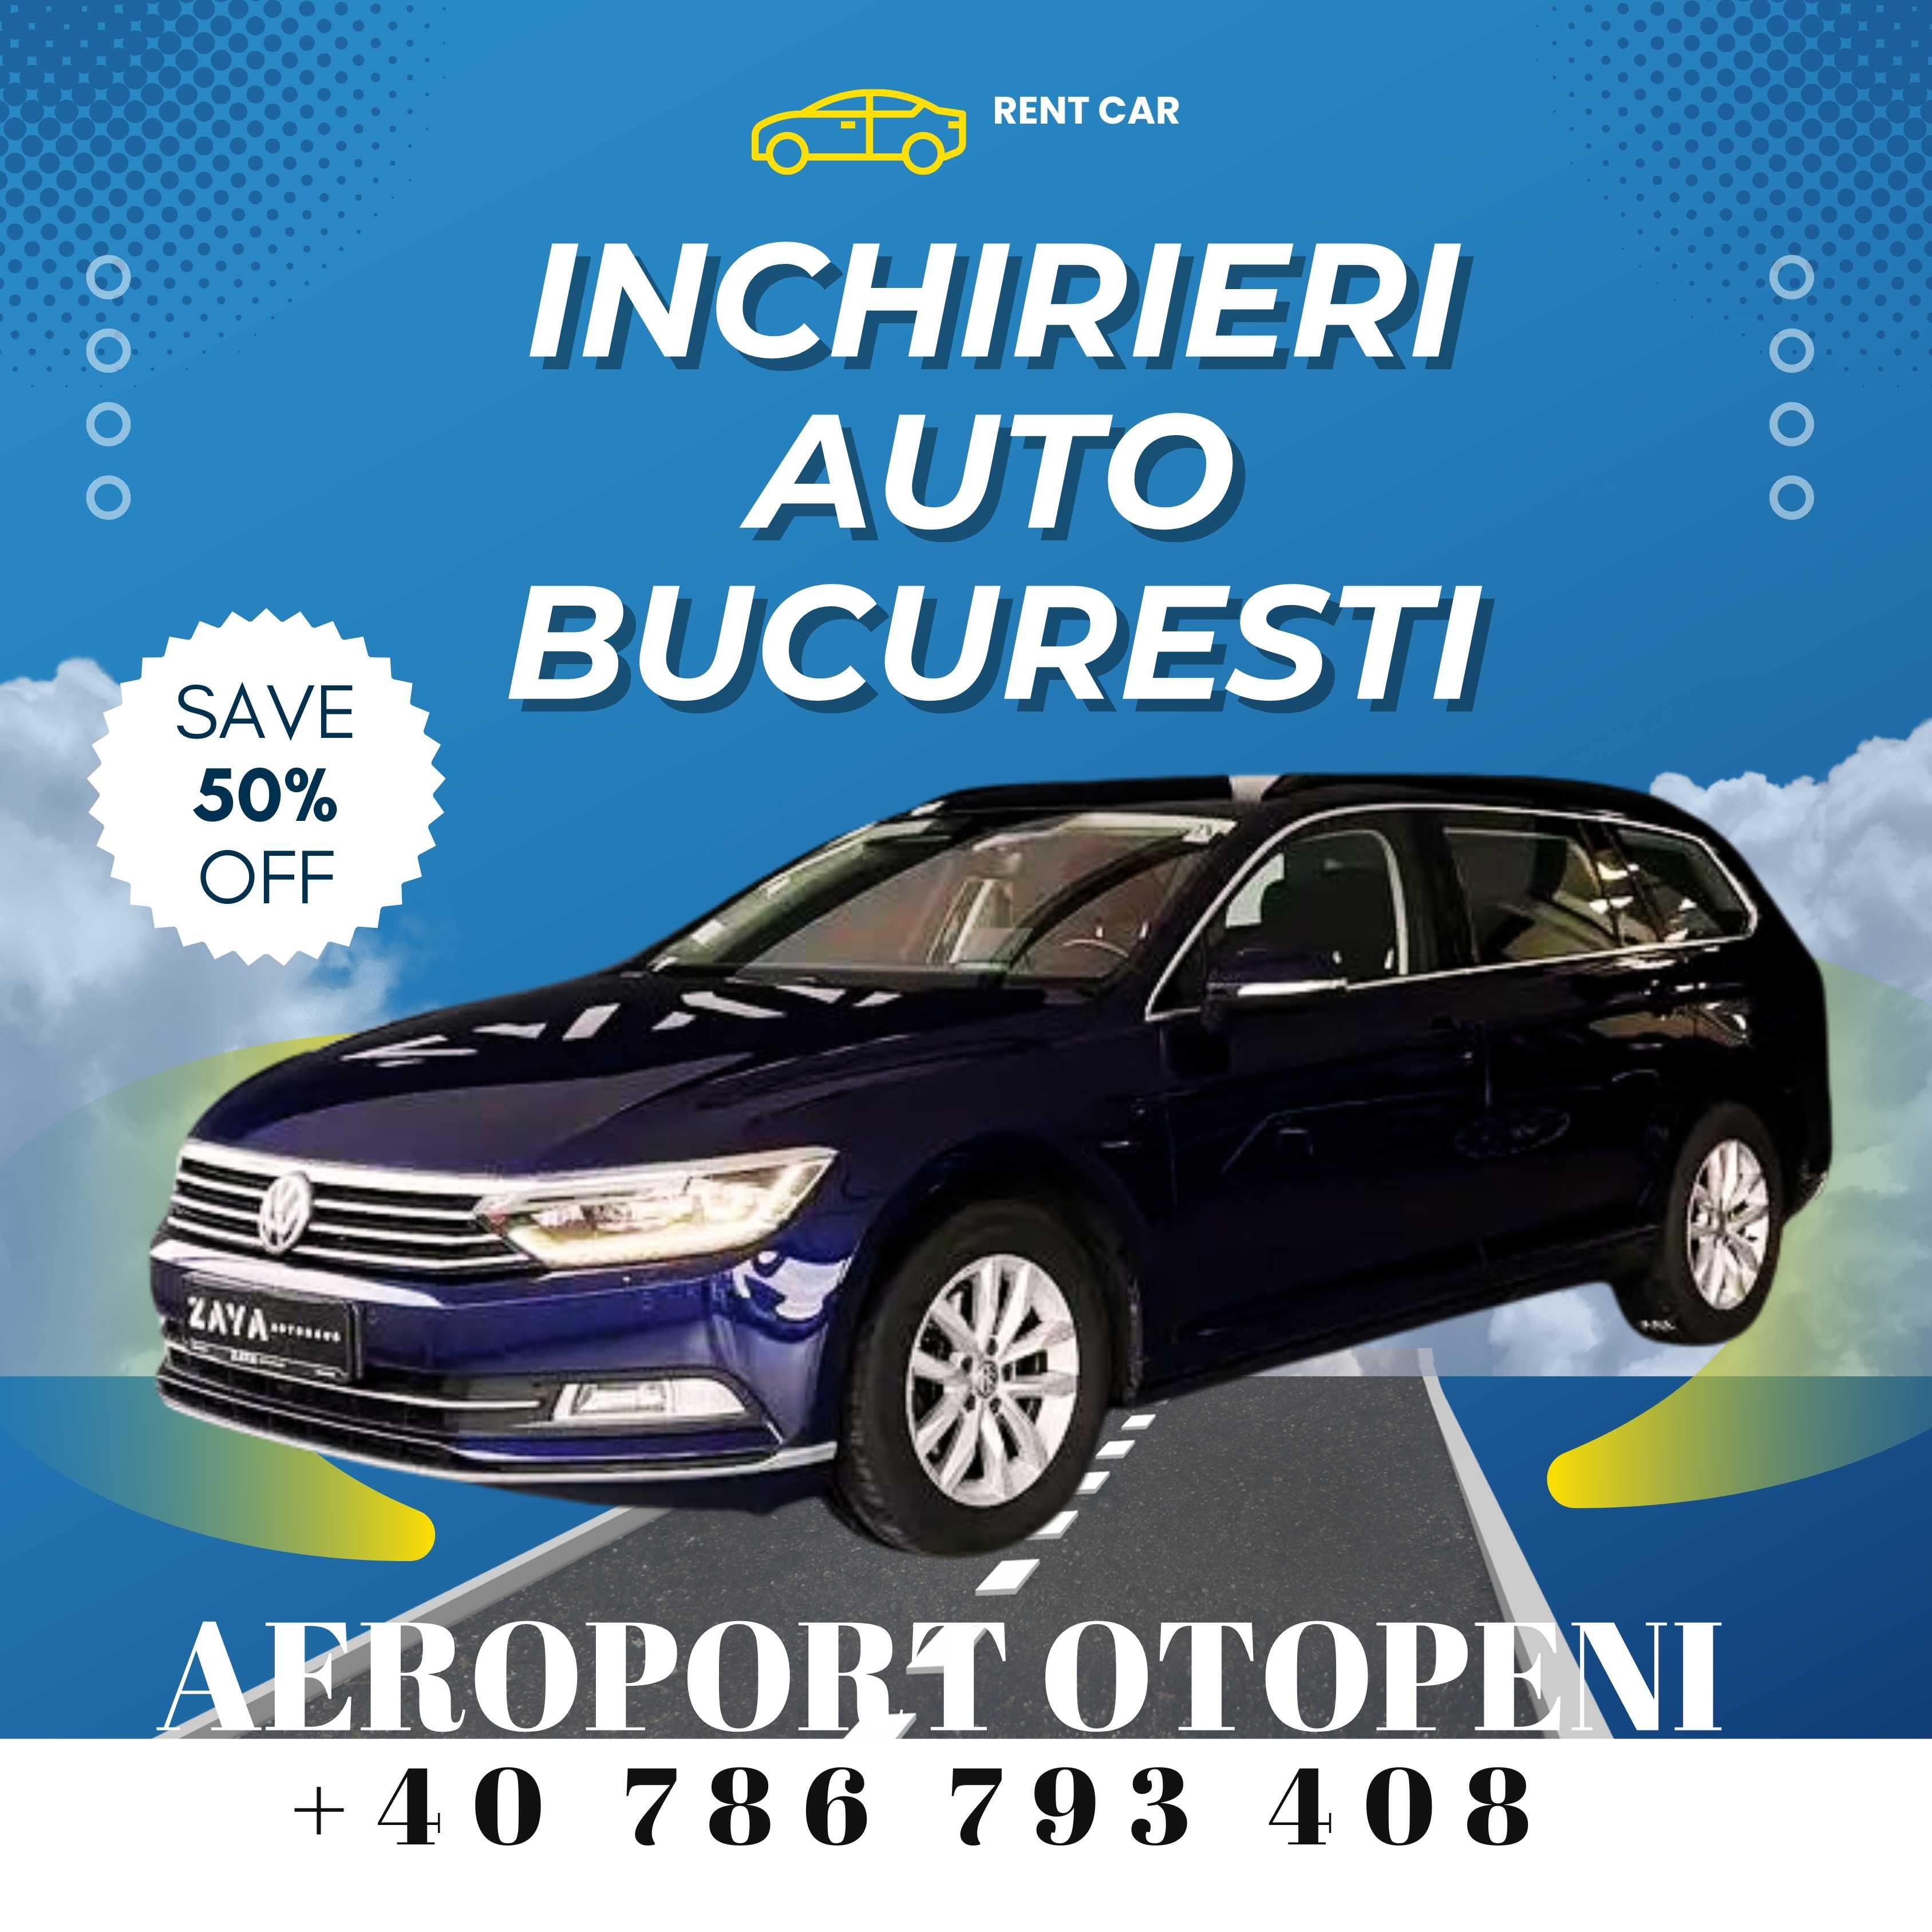 Inchirieri auto Rent a car / Masini de inchiriat Bucuresti - Aeroport